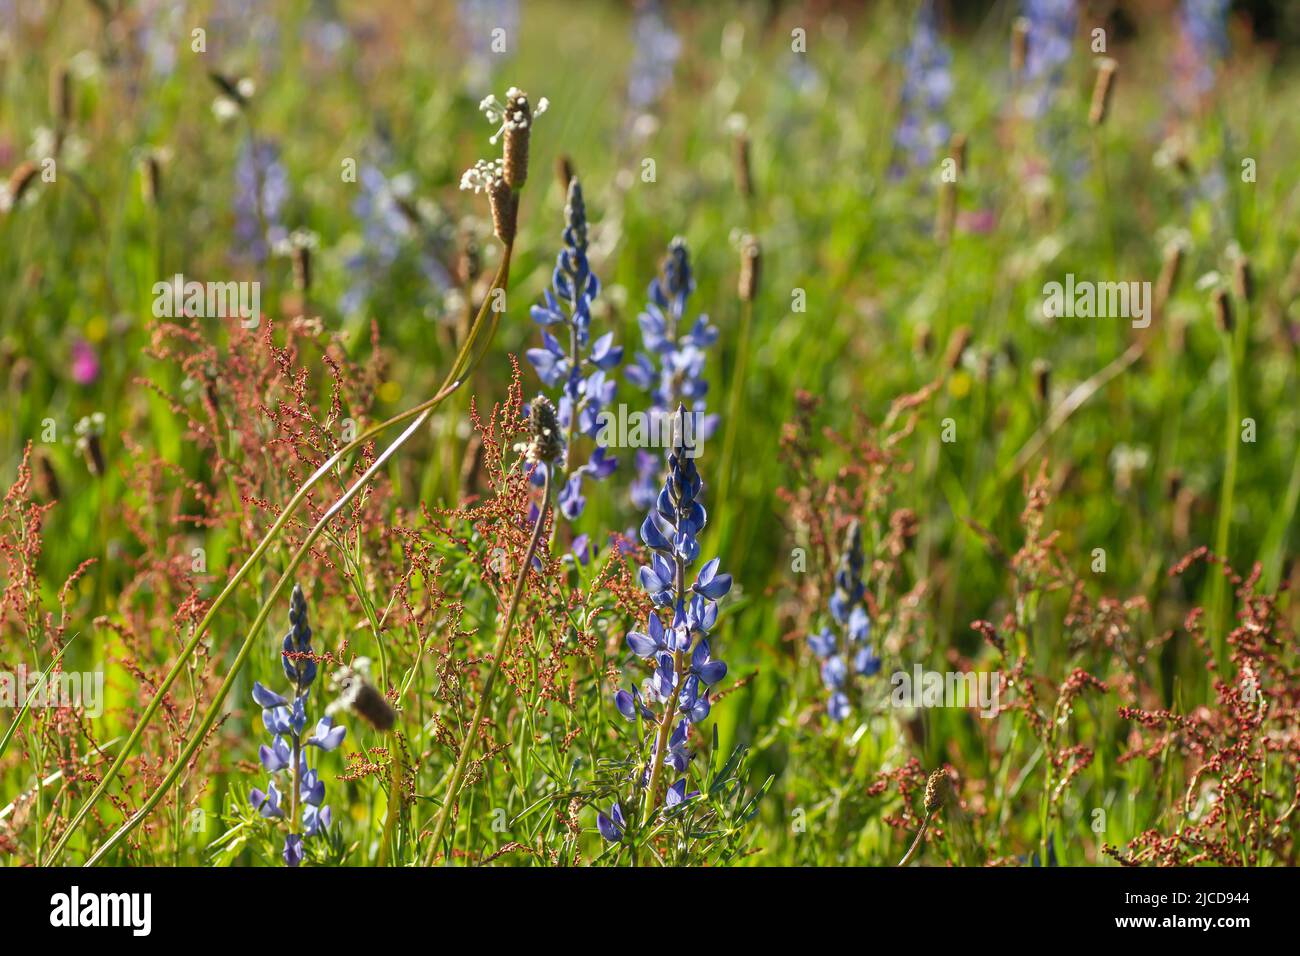 Lupinus angustifolius or narrowleaf lupin wild flowers Stock Photo